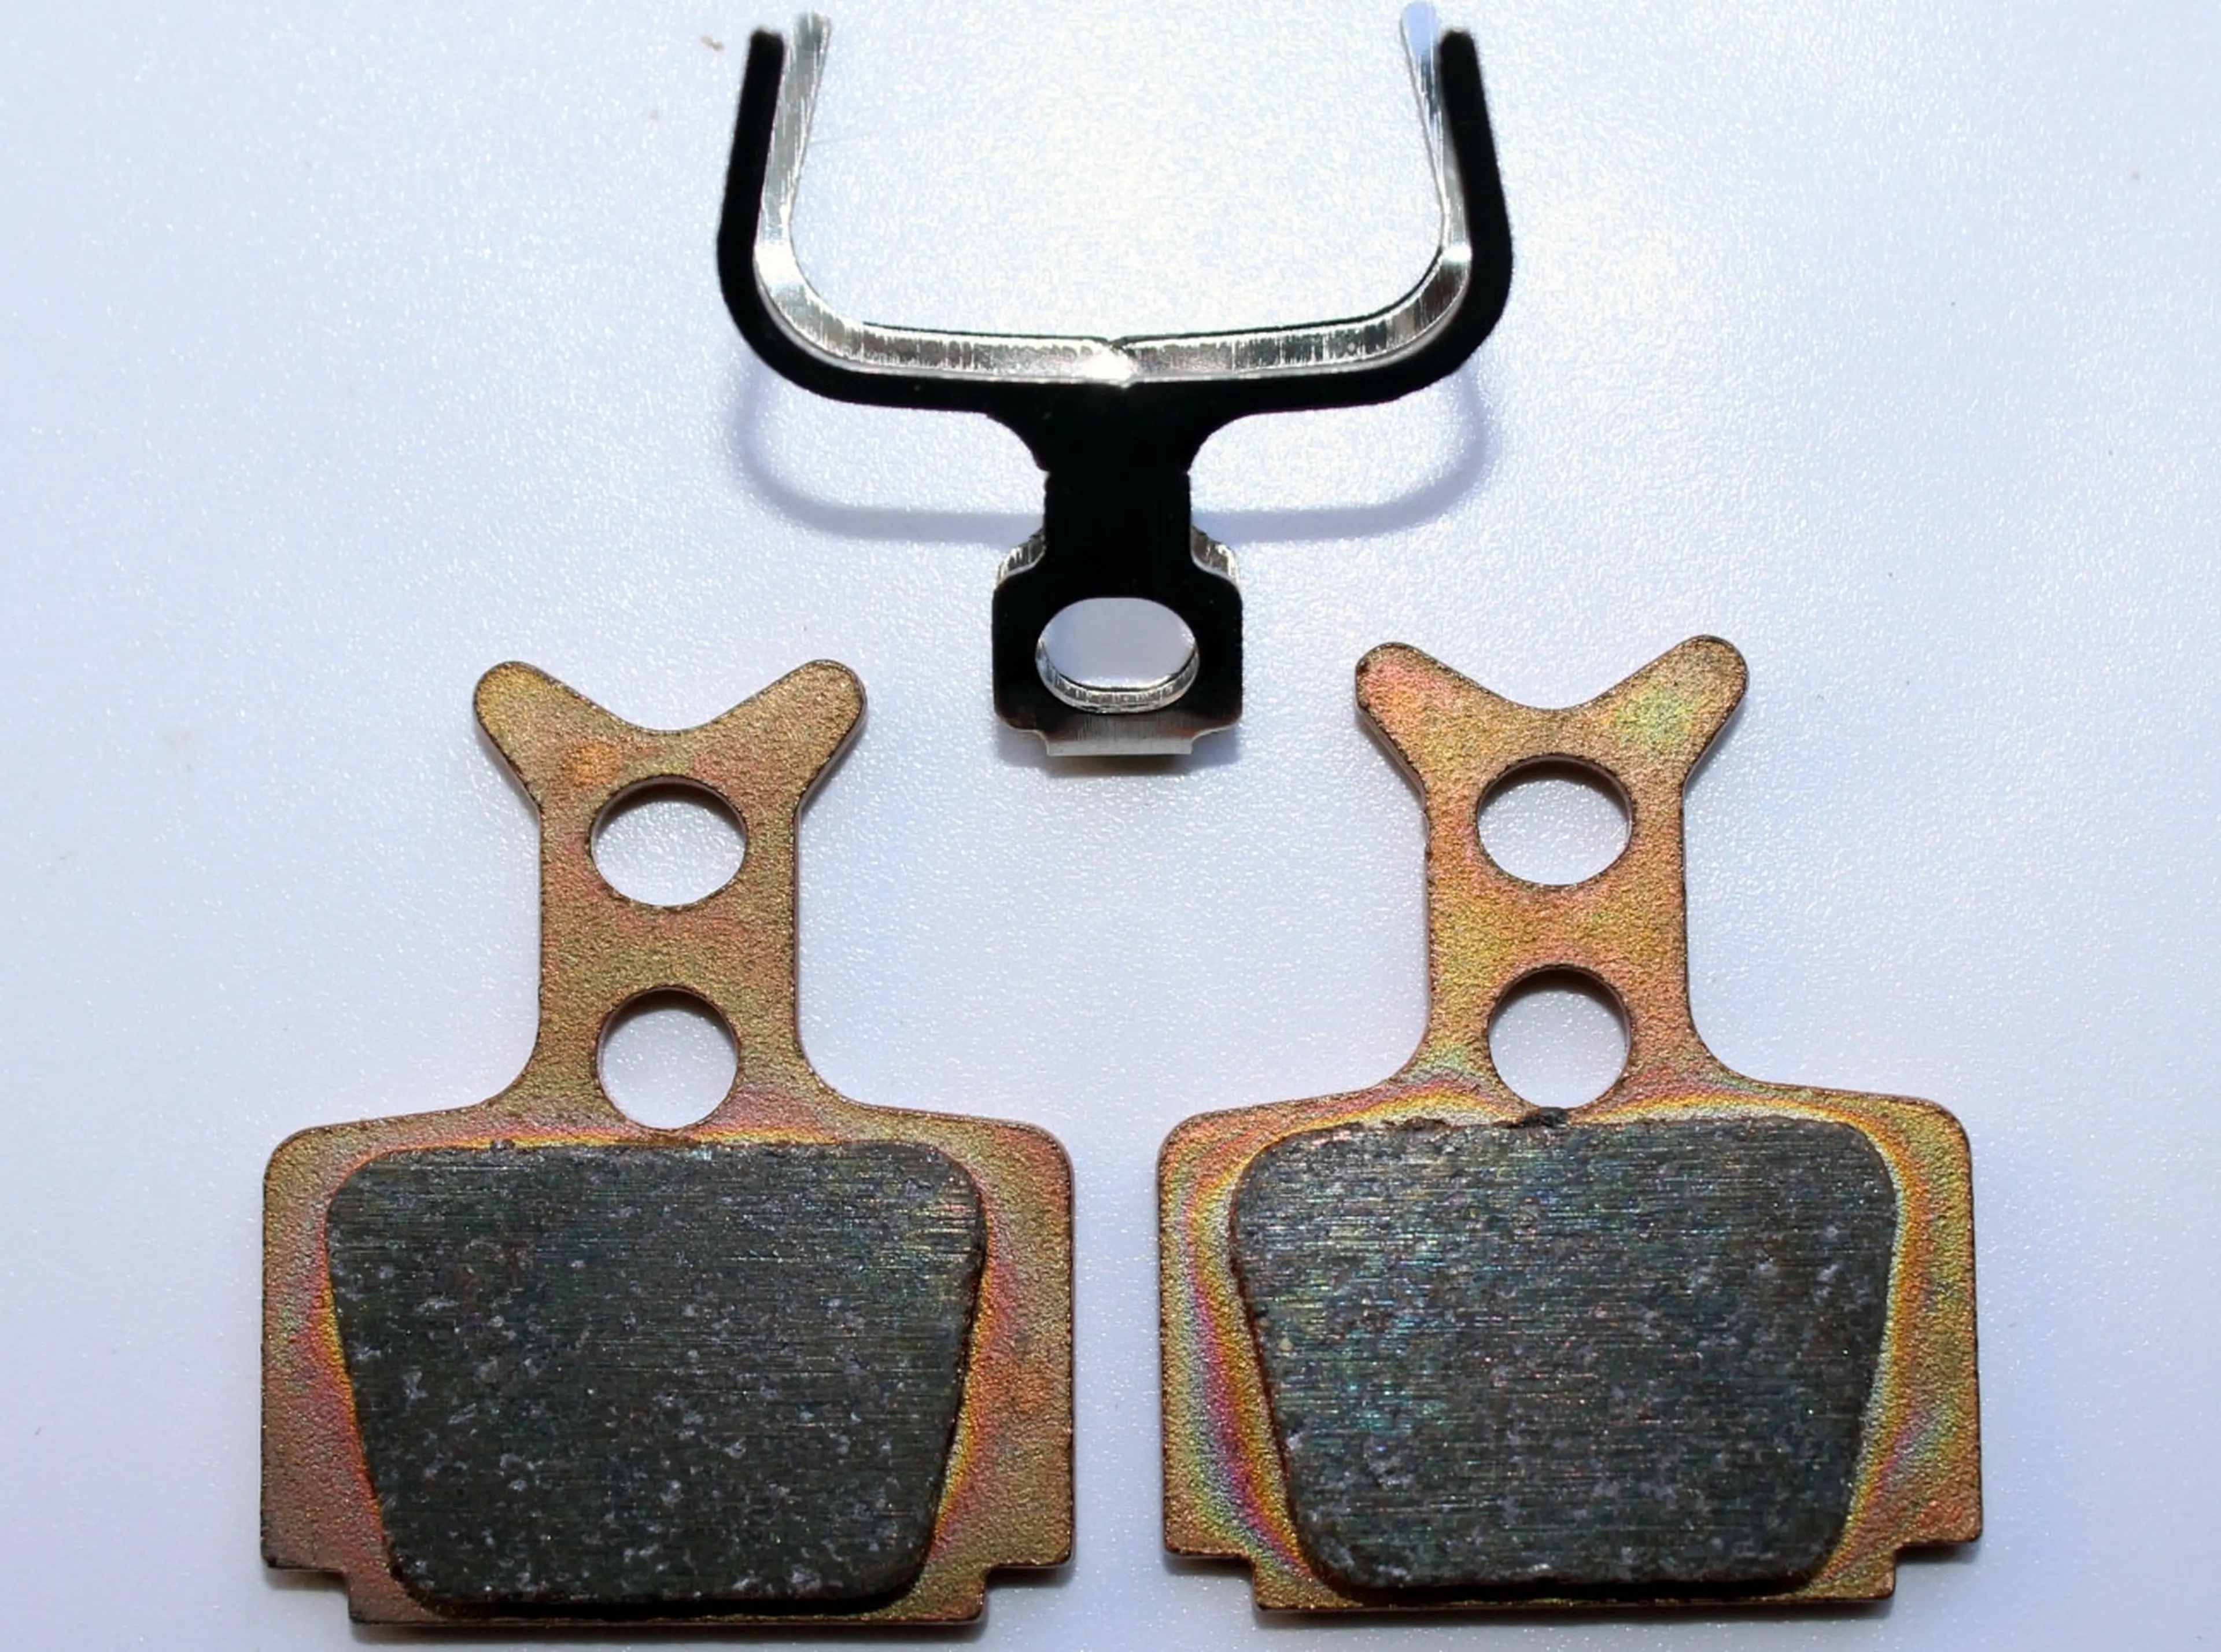 Image Formula RX, R1, RO, One, Mega, C1, T1 Metal - ceramic